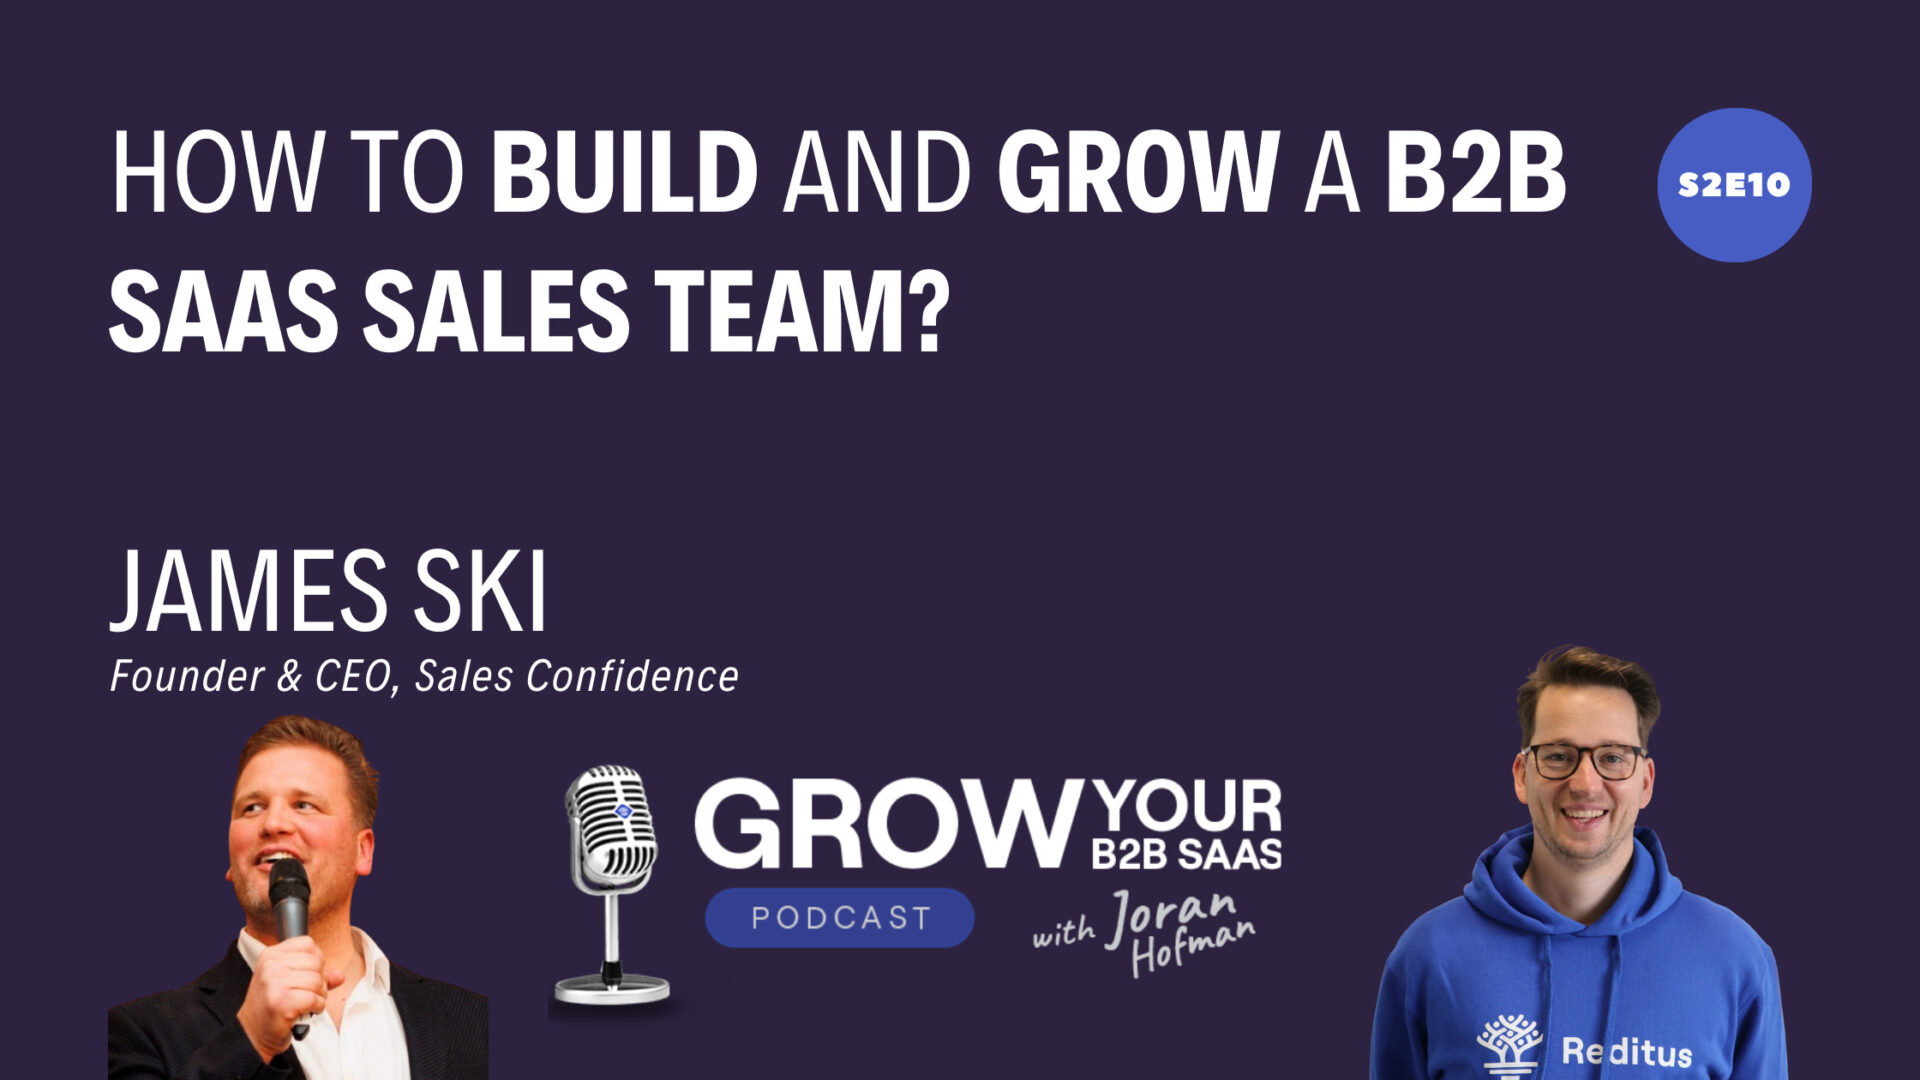 https://www.getreditus.com/podcast/s2e10-how-to-build-and-grow-a-b2b-saas-sales-team-with-james-ski/